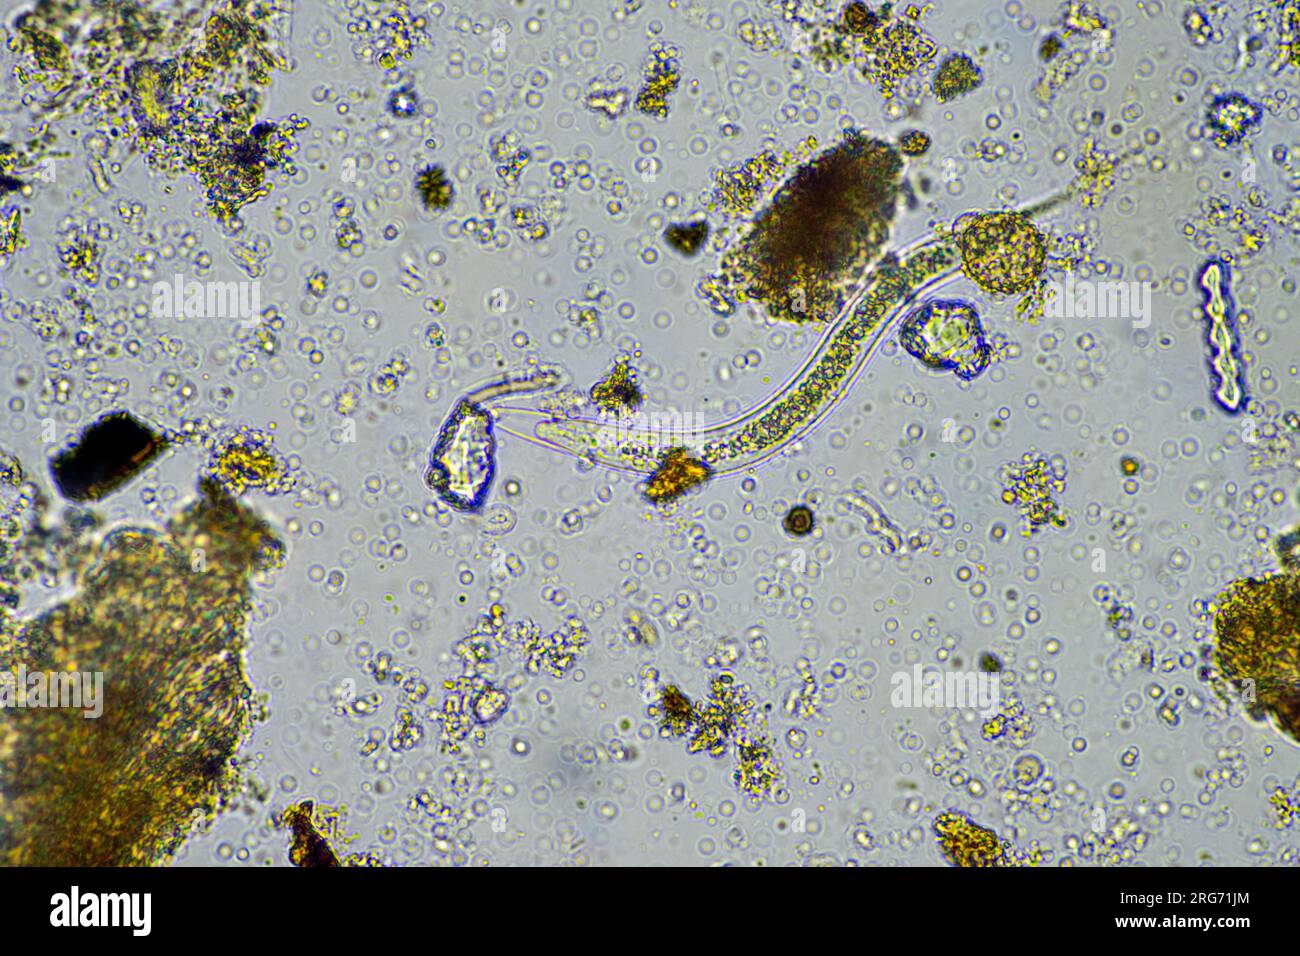 bacterial feeding soil nematode in a soil sample under the microscope on a regenerative farm Stock Photo